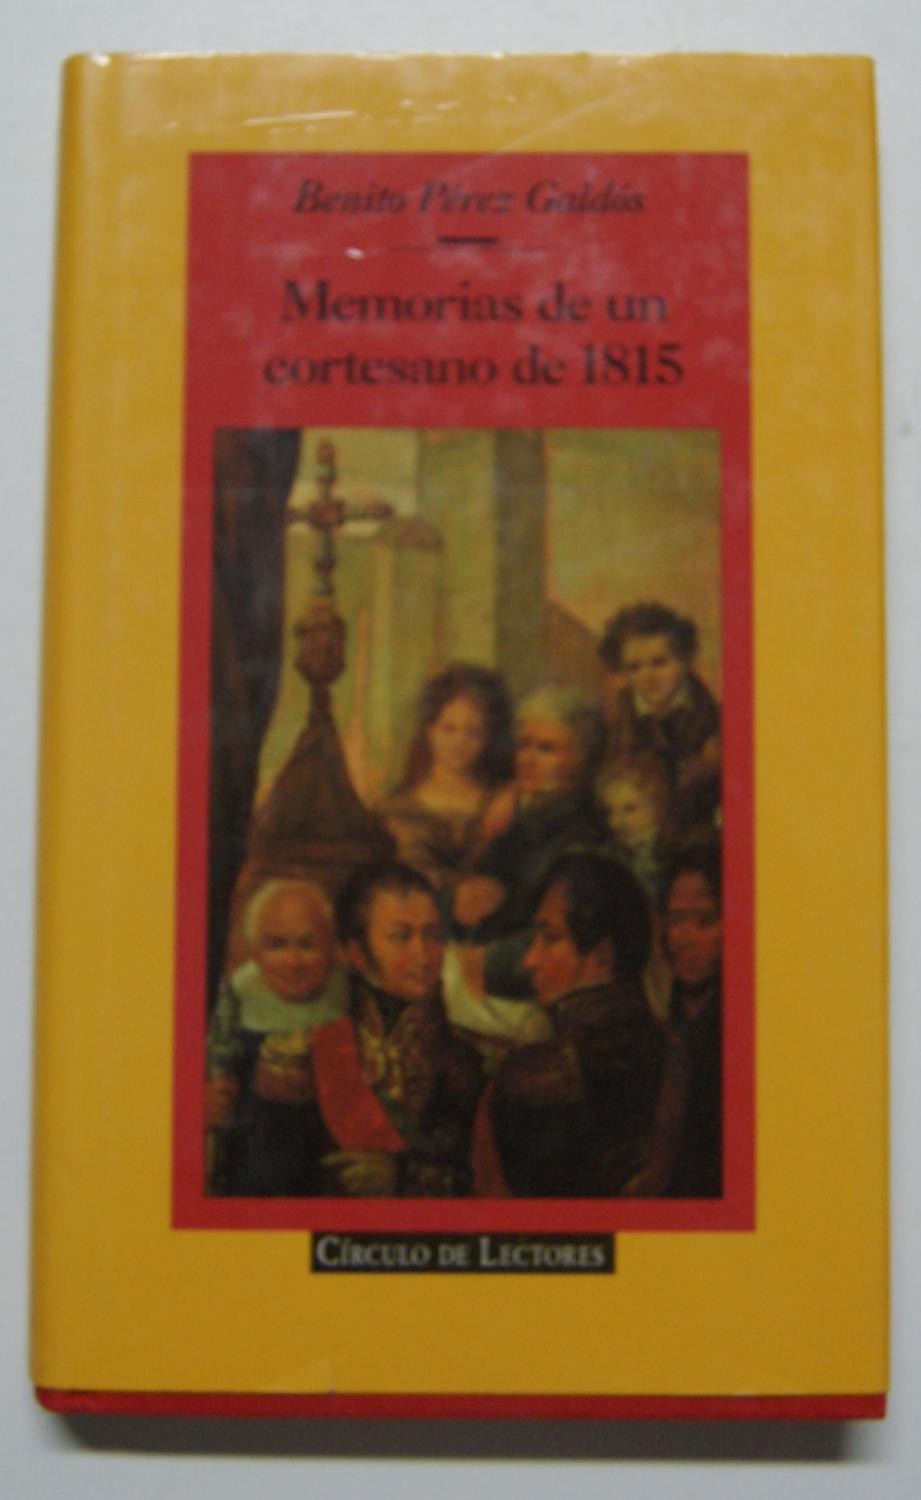 Memorias de un cortesano de 1815 - Pérez Galdós, Benito